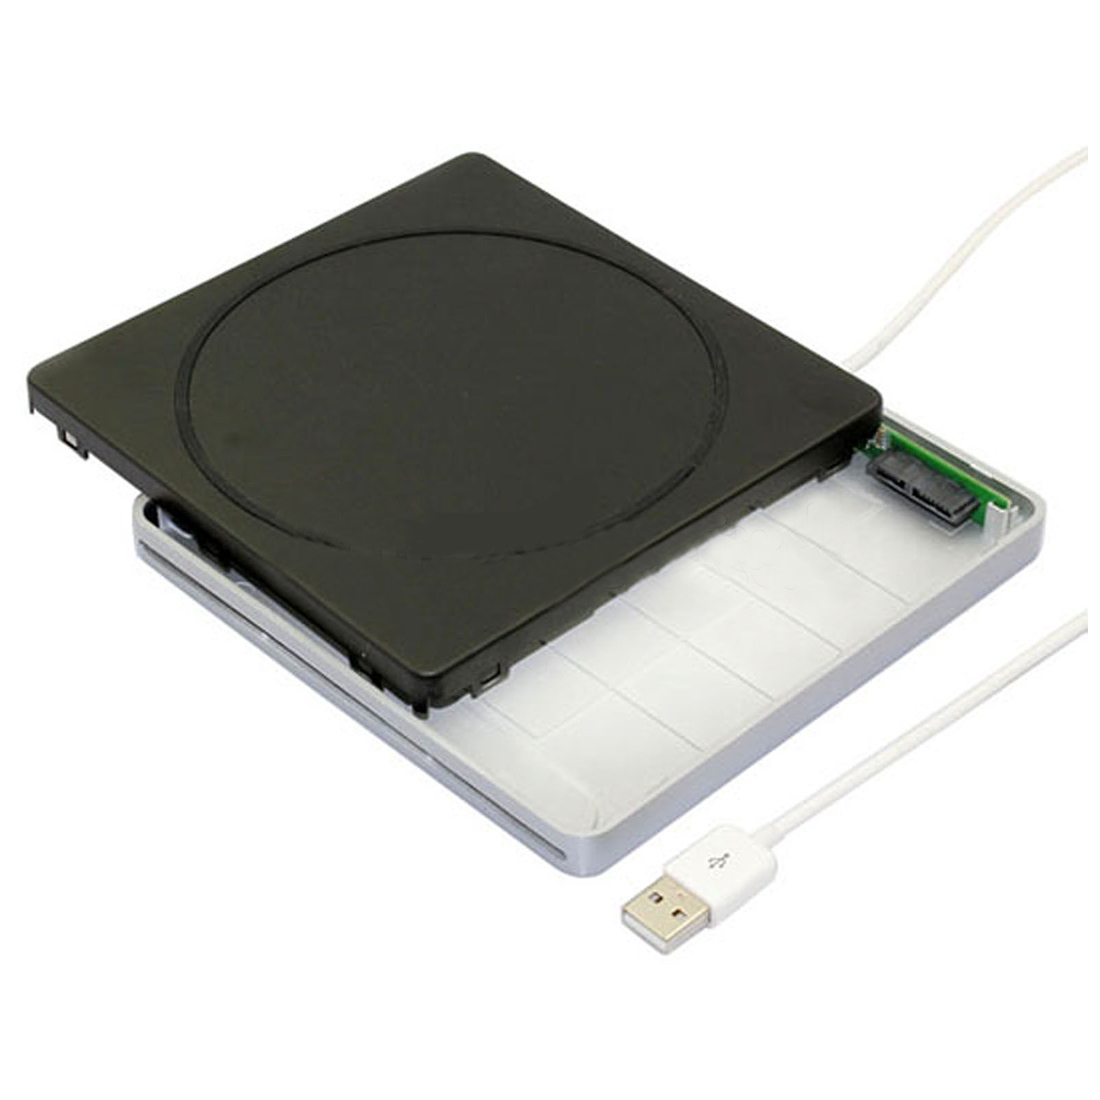 Slot-in USB SATA External CD DVD/RW Drive Enclosure Caddy Case For Apple MacBook